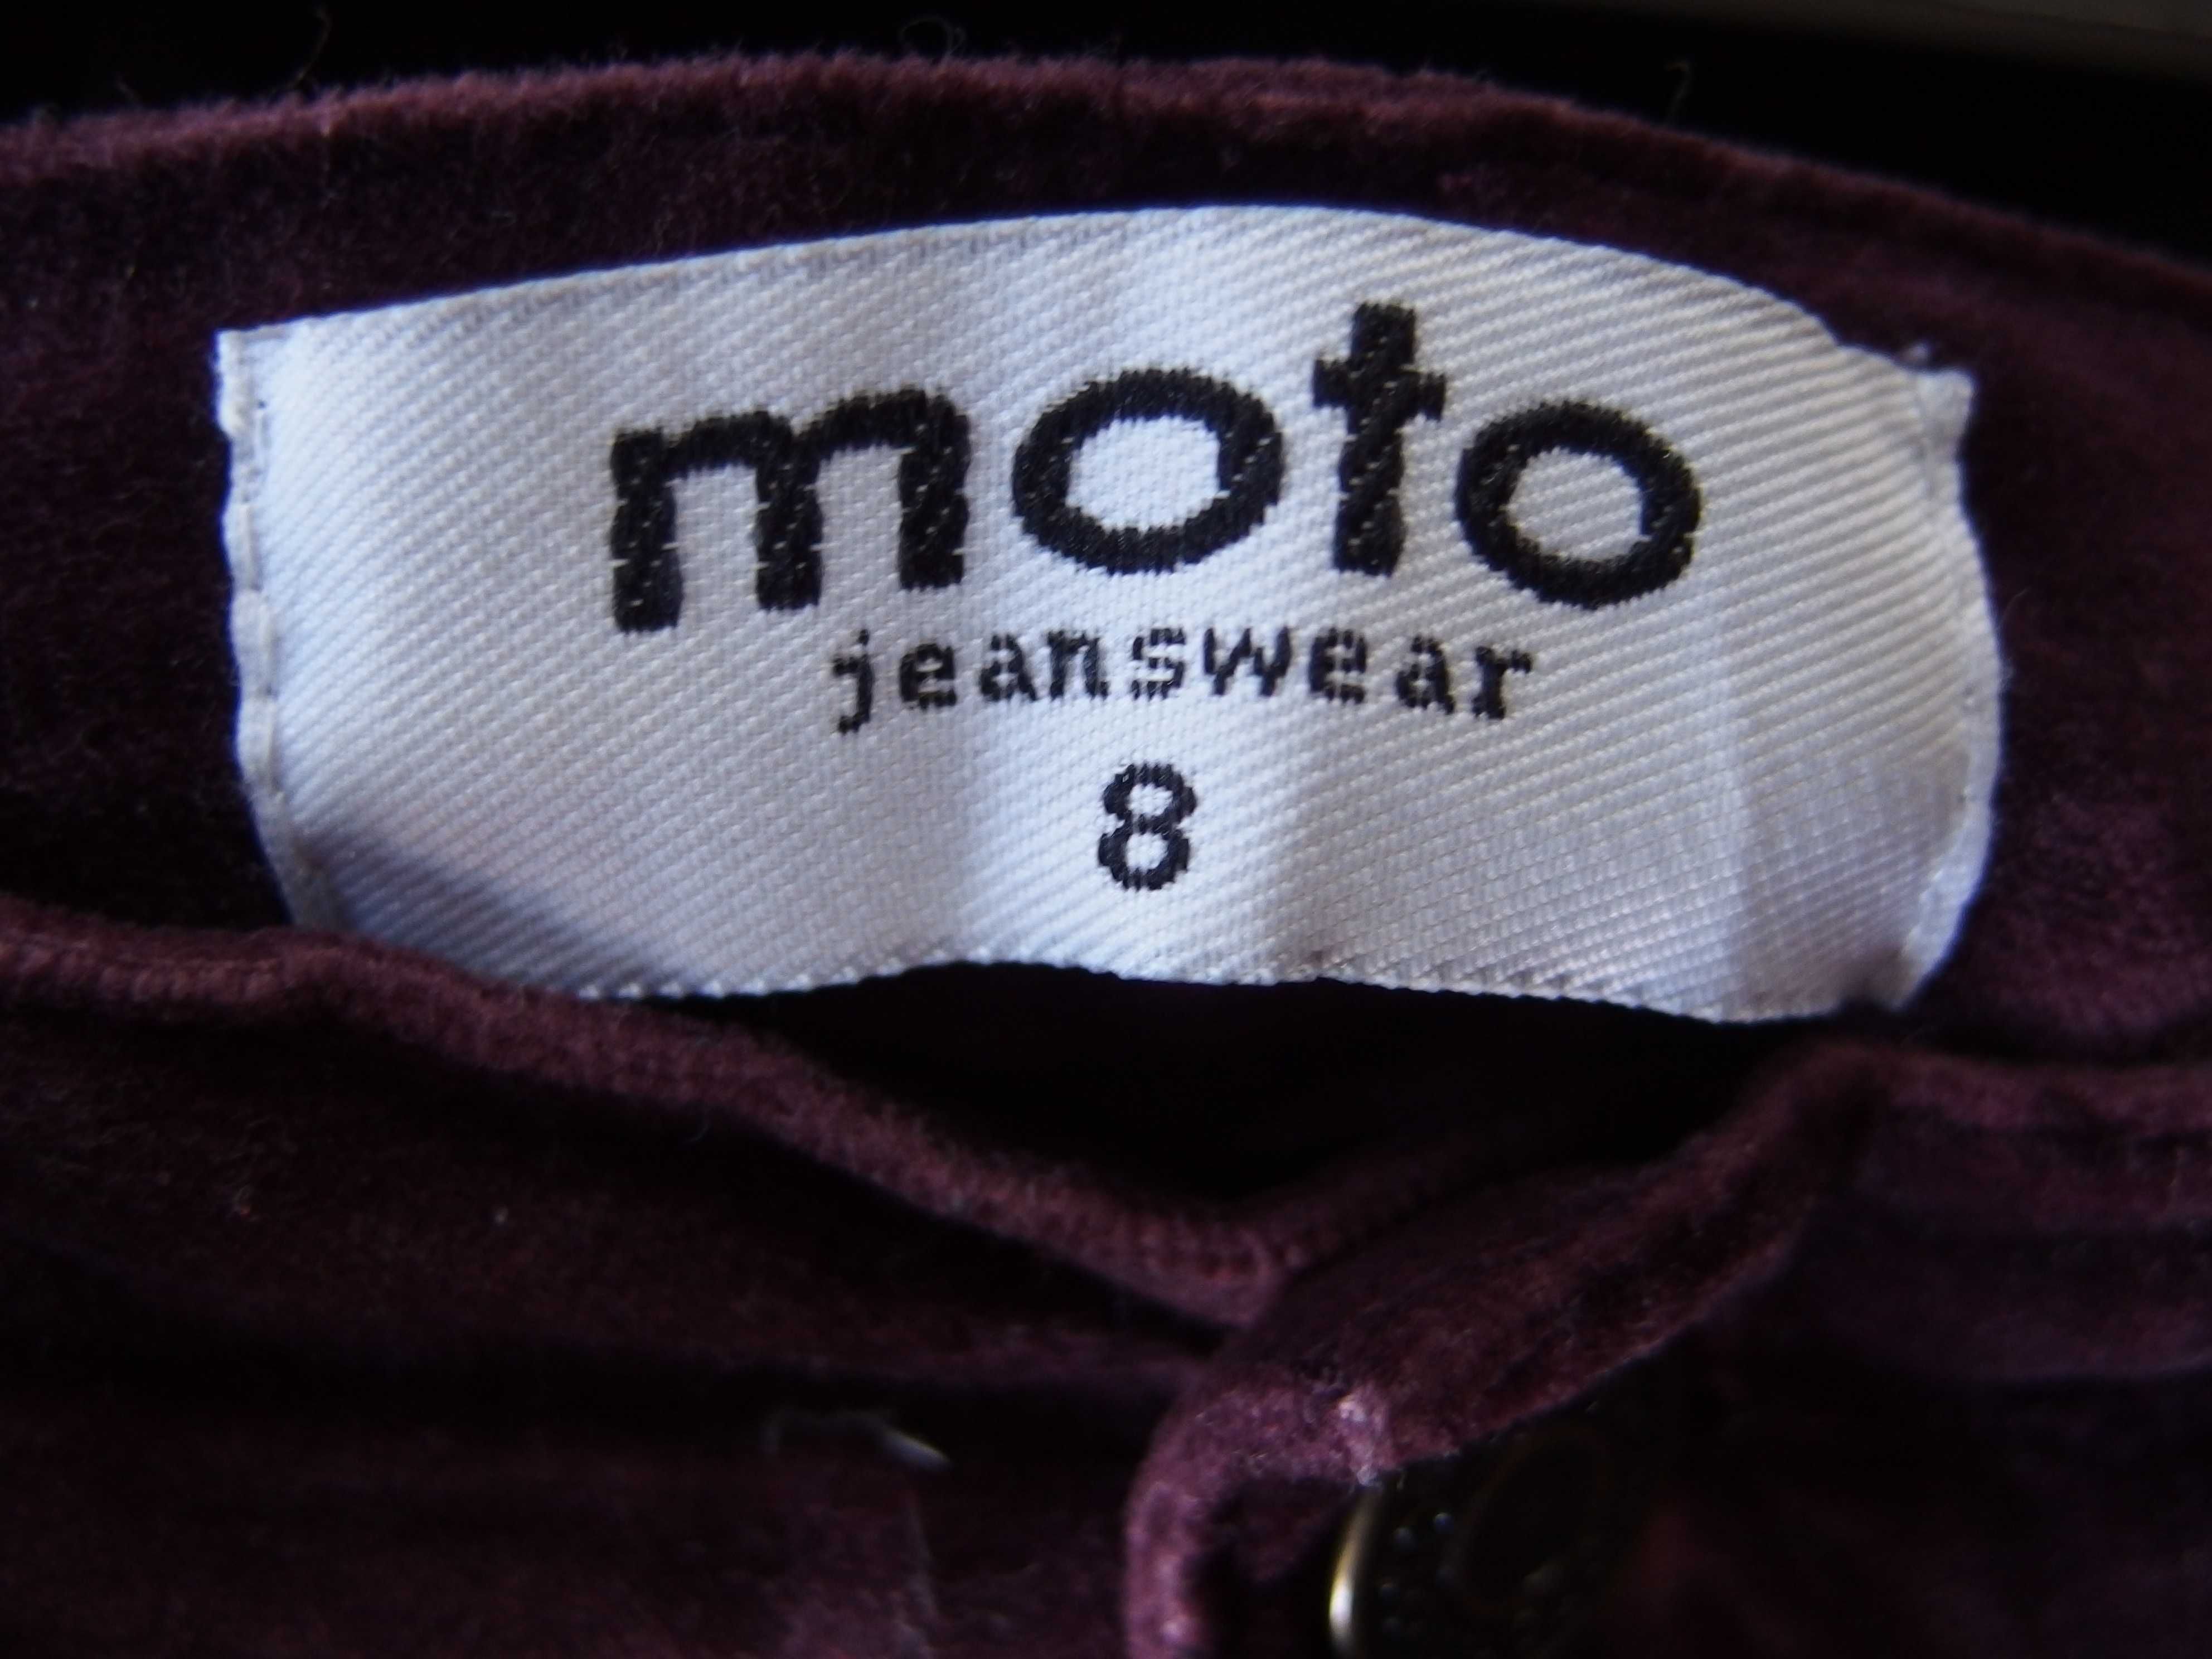 Spodnie welurowe Moto Jeanswear. Bordowe. Made in Hong Kong.